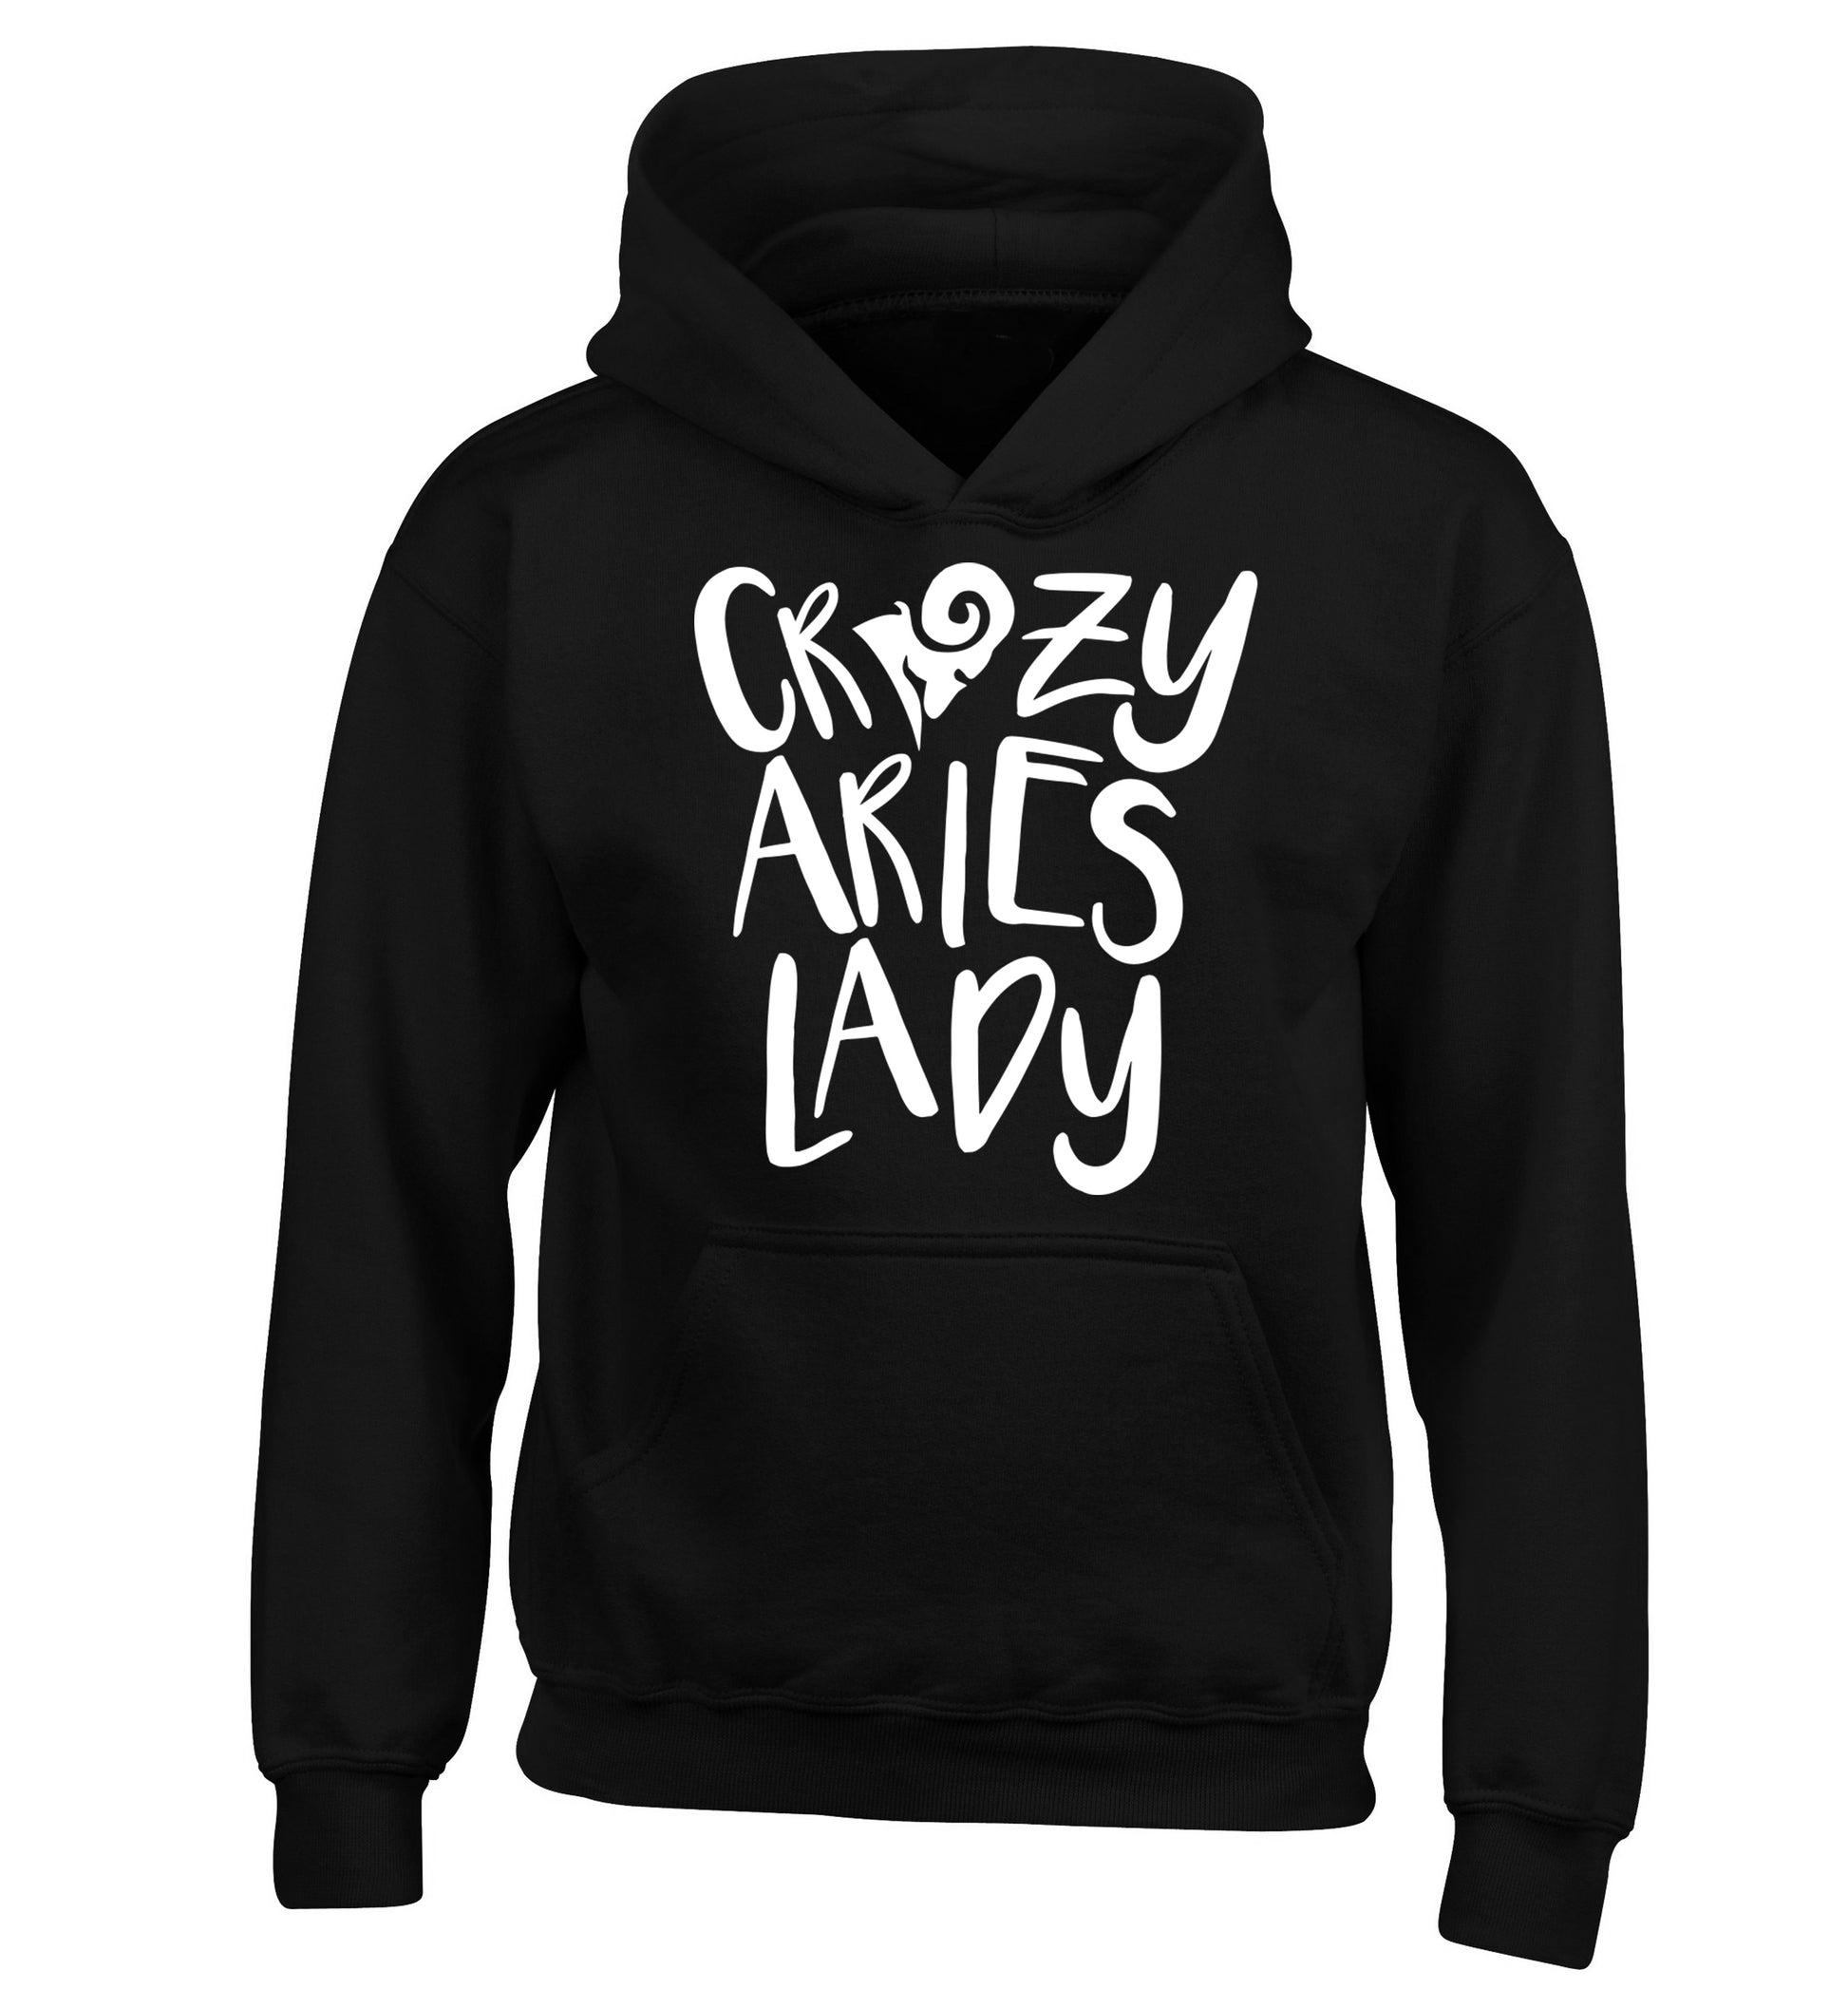 Crazy aries lady children's black hoodie 12-13 Years